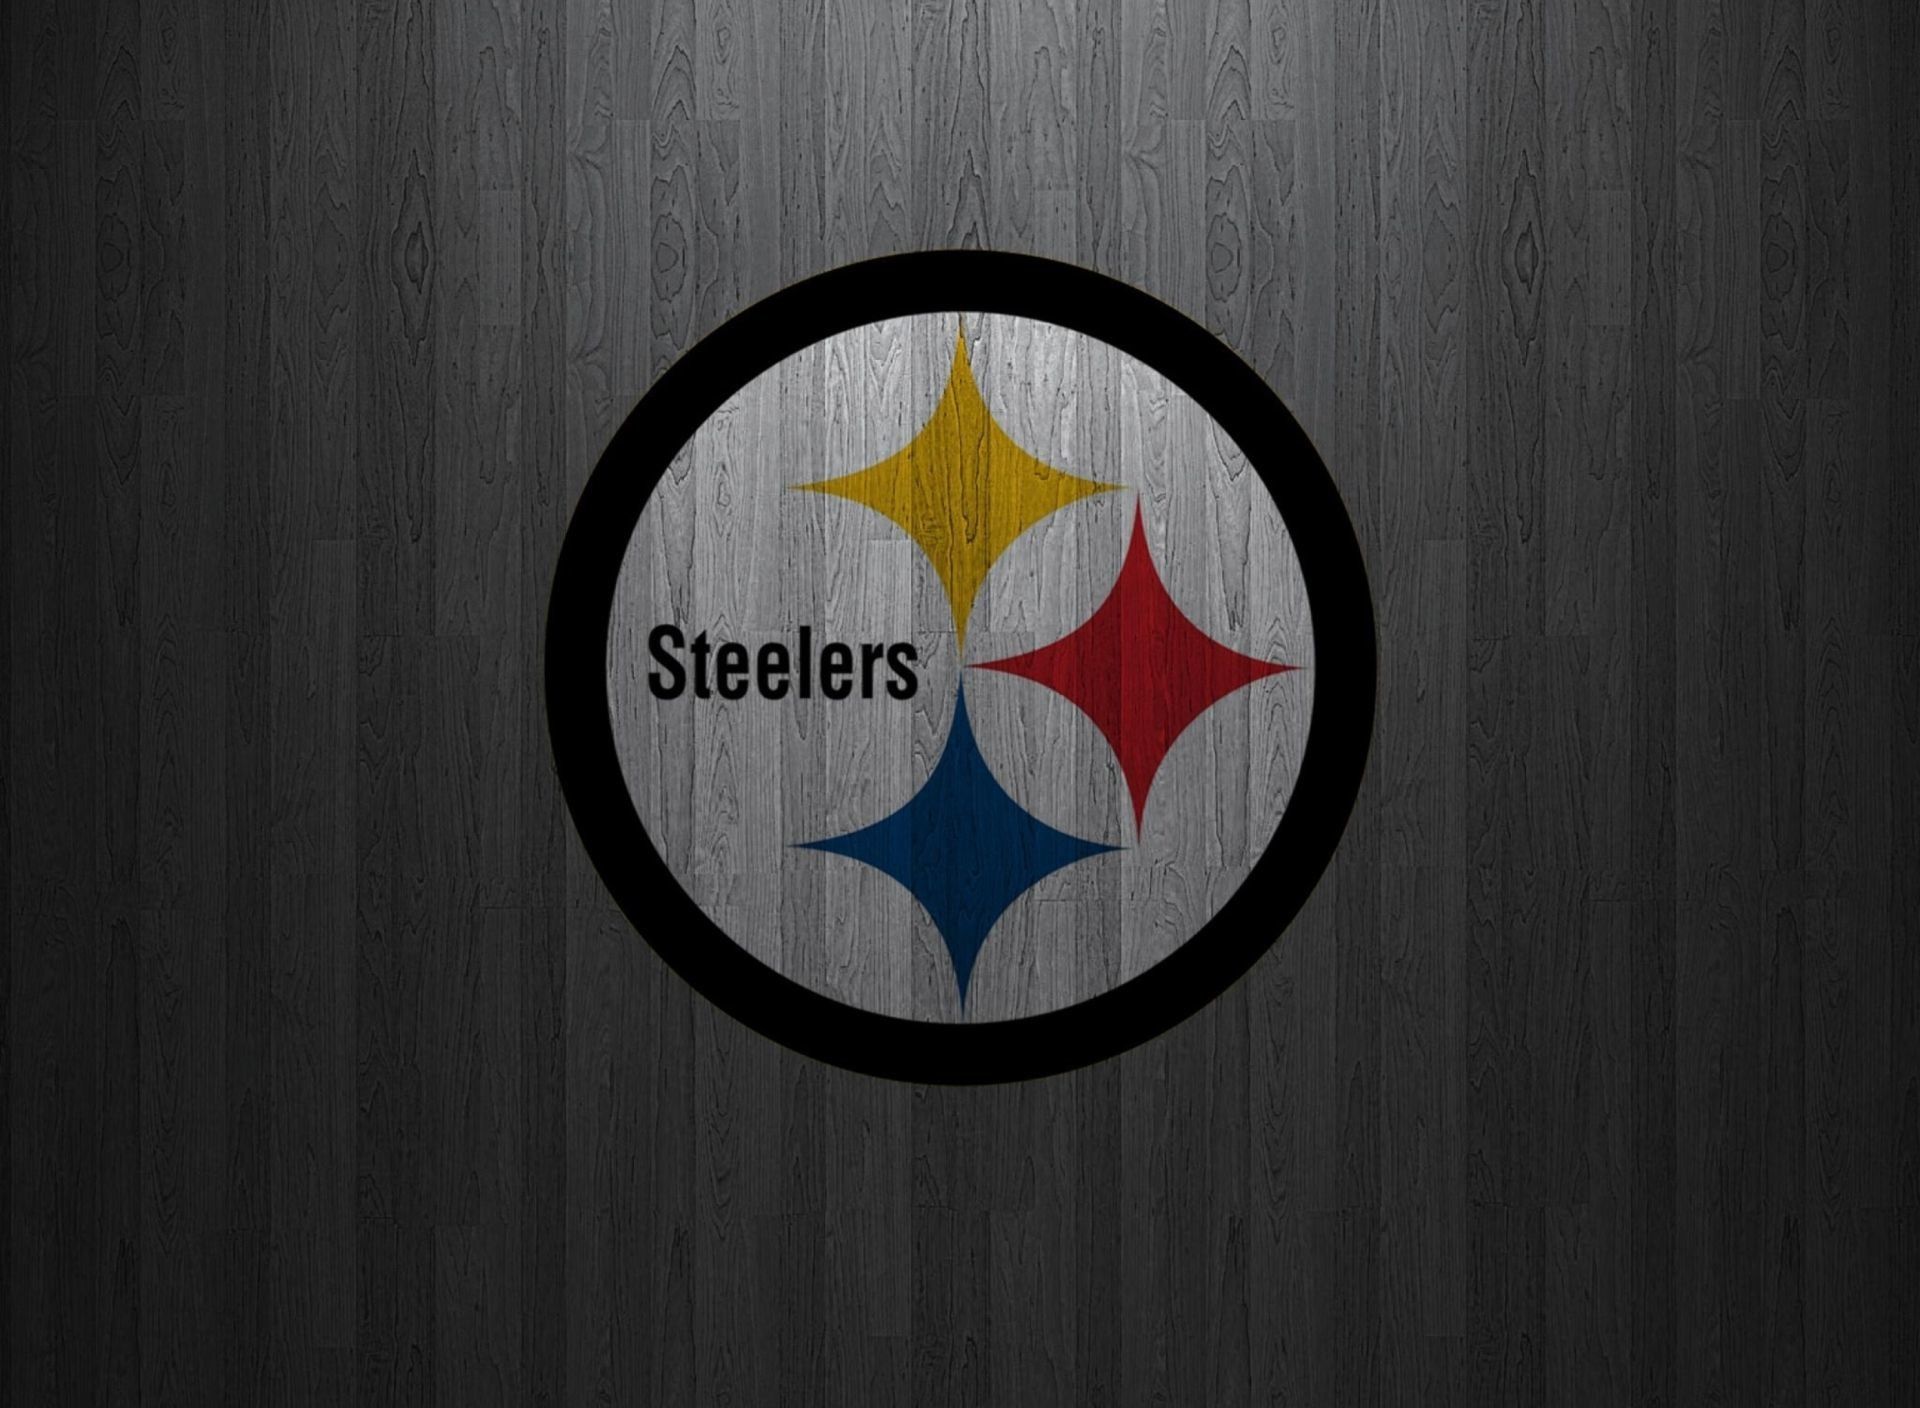 Pittsburgh Steelers Iphone Wallpapers